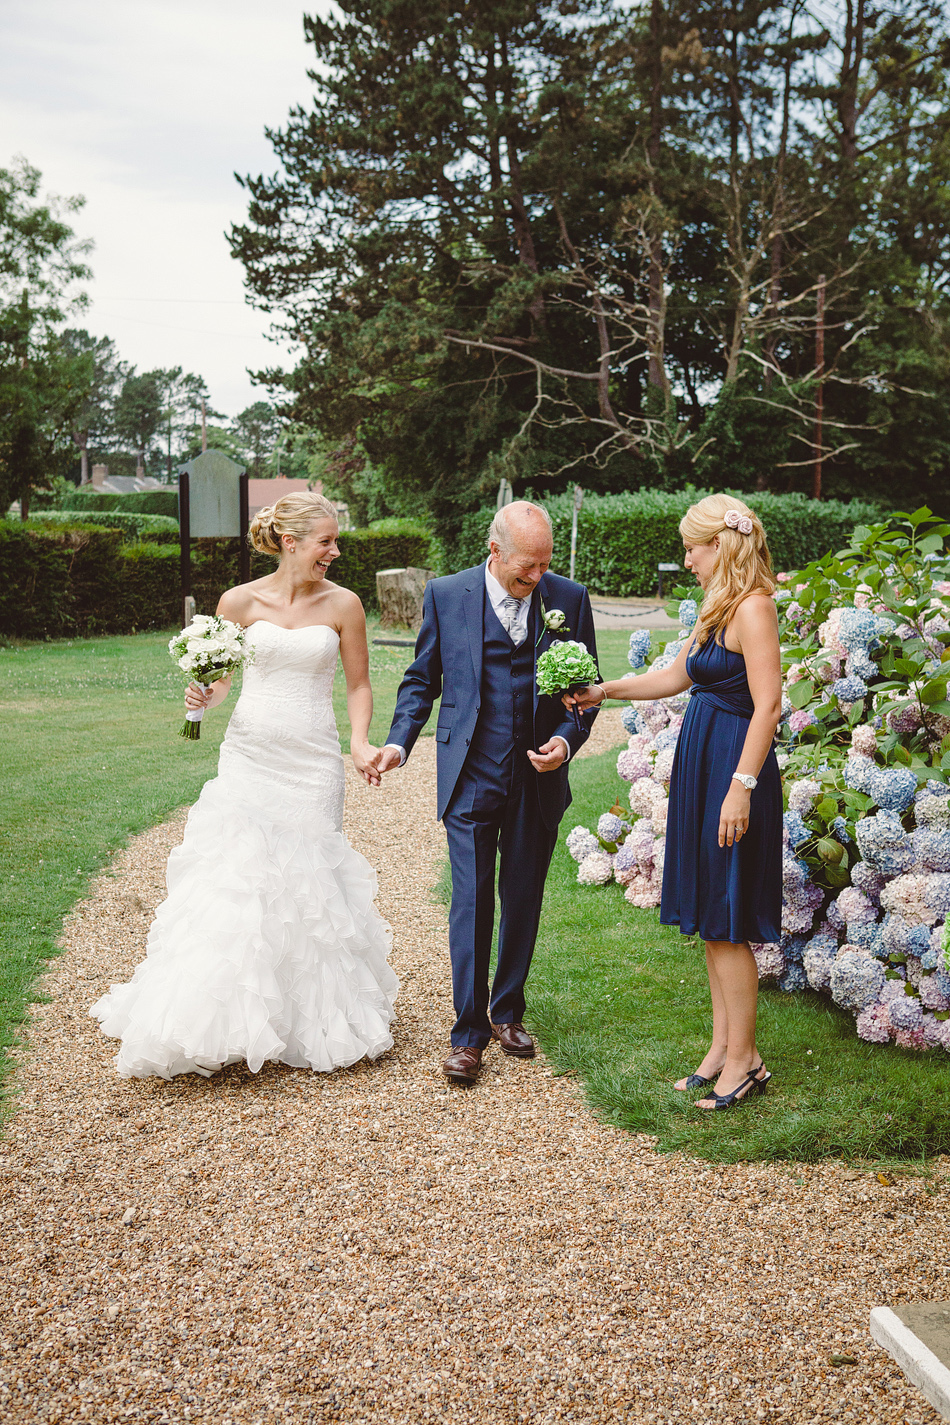 Wedding Photographer Surrey, Wedding Photographer Surrey | Jennie and Neil |Woldingham